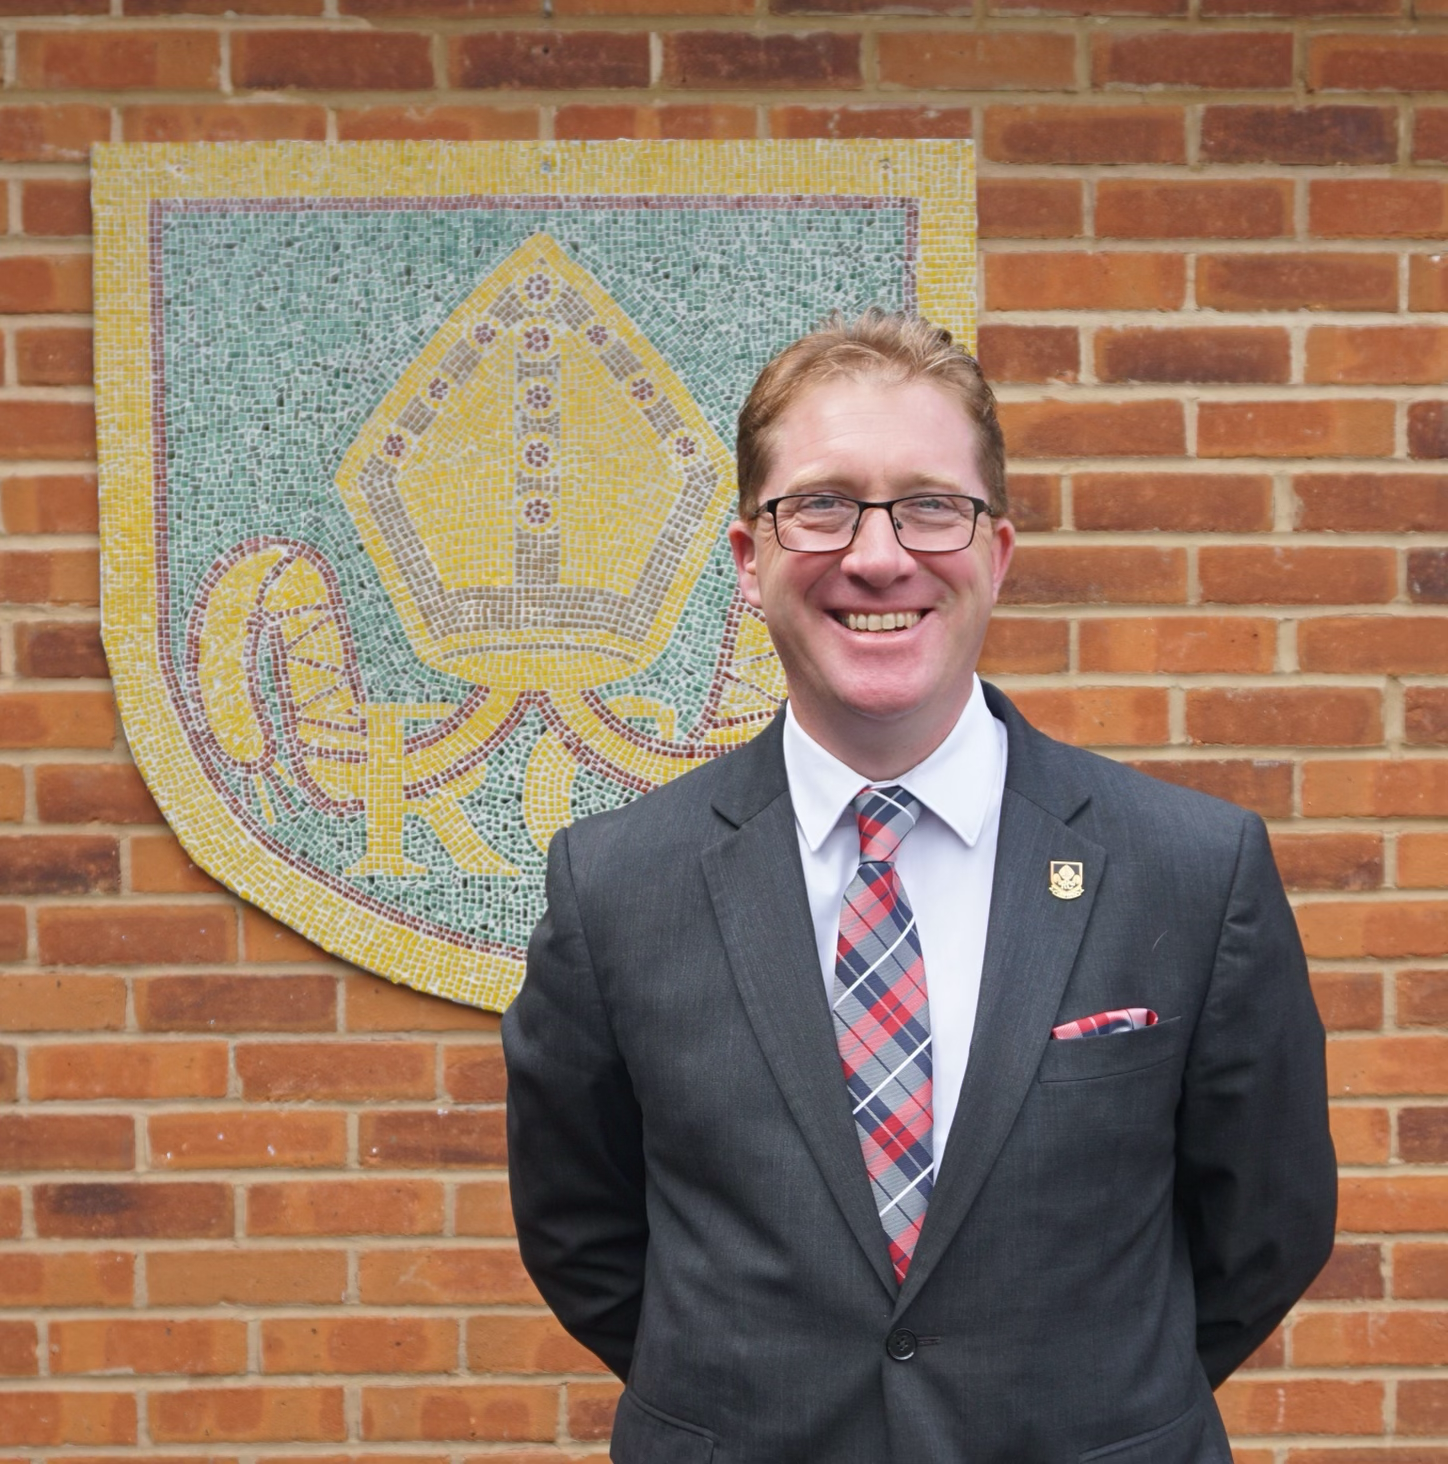 Sean Maher, Headmaster of Richard Challon school in Surrey